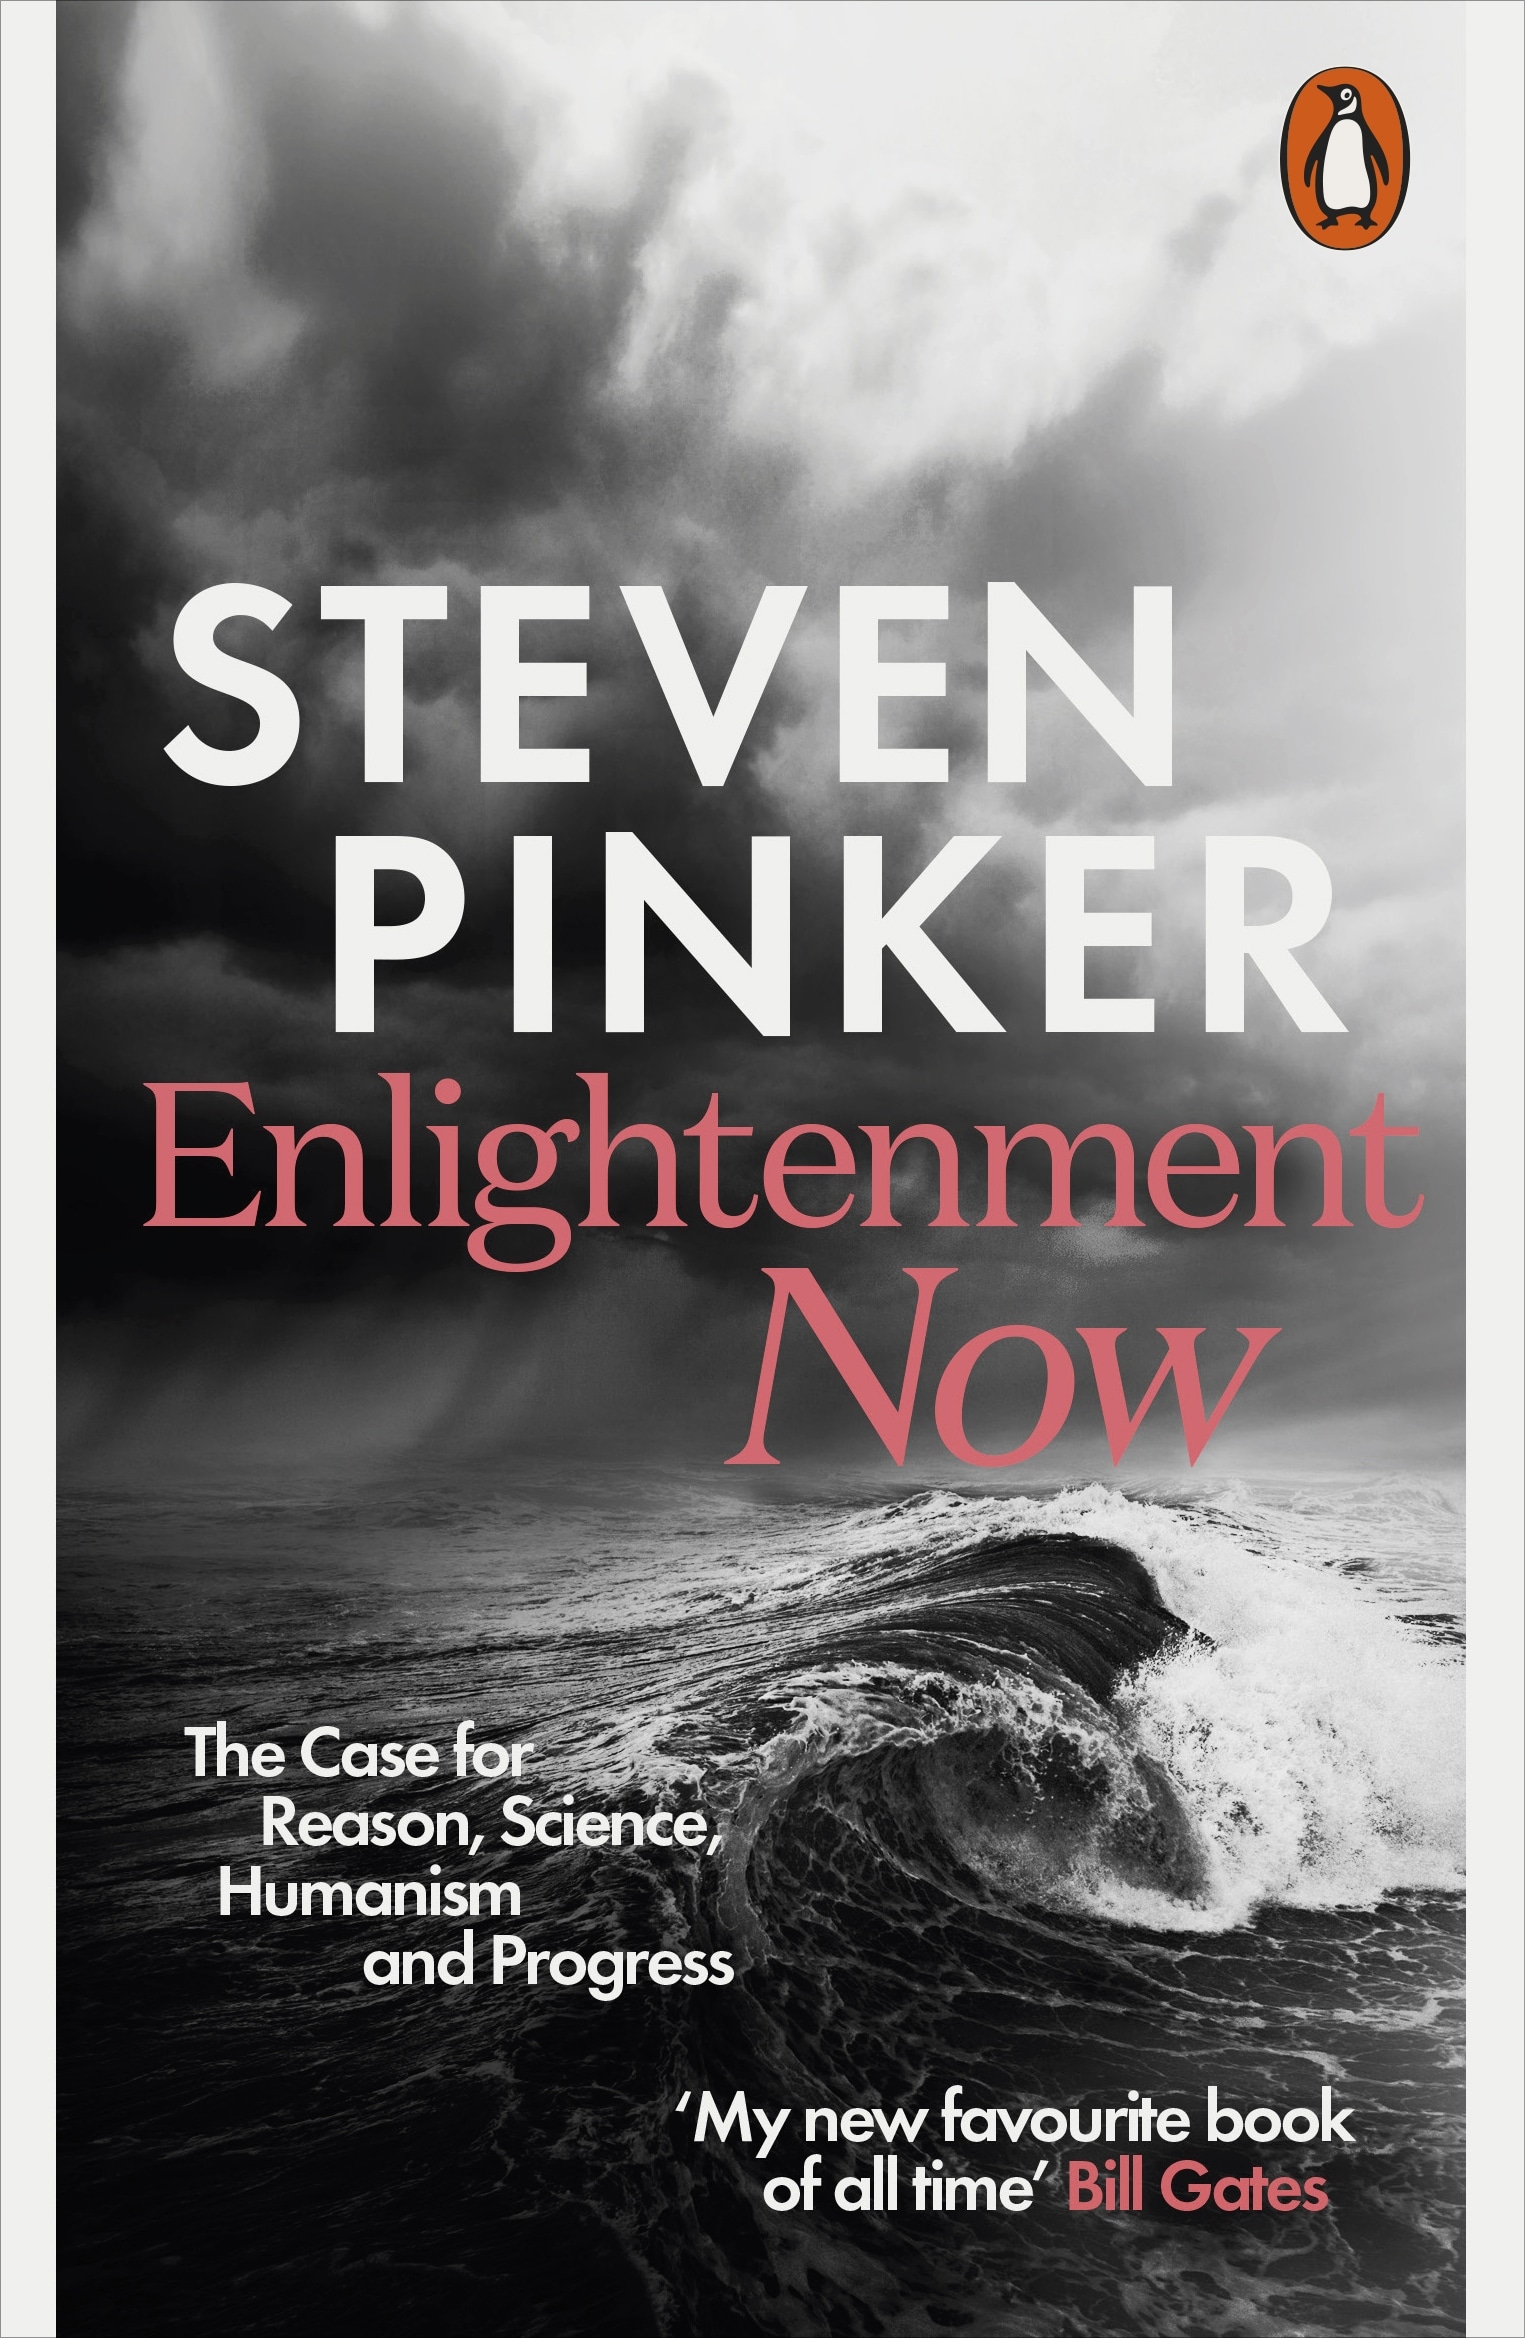 Book “Enlightenment Now” by Steven Pinker — January 3, 2019